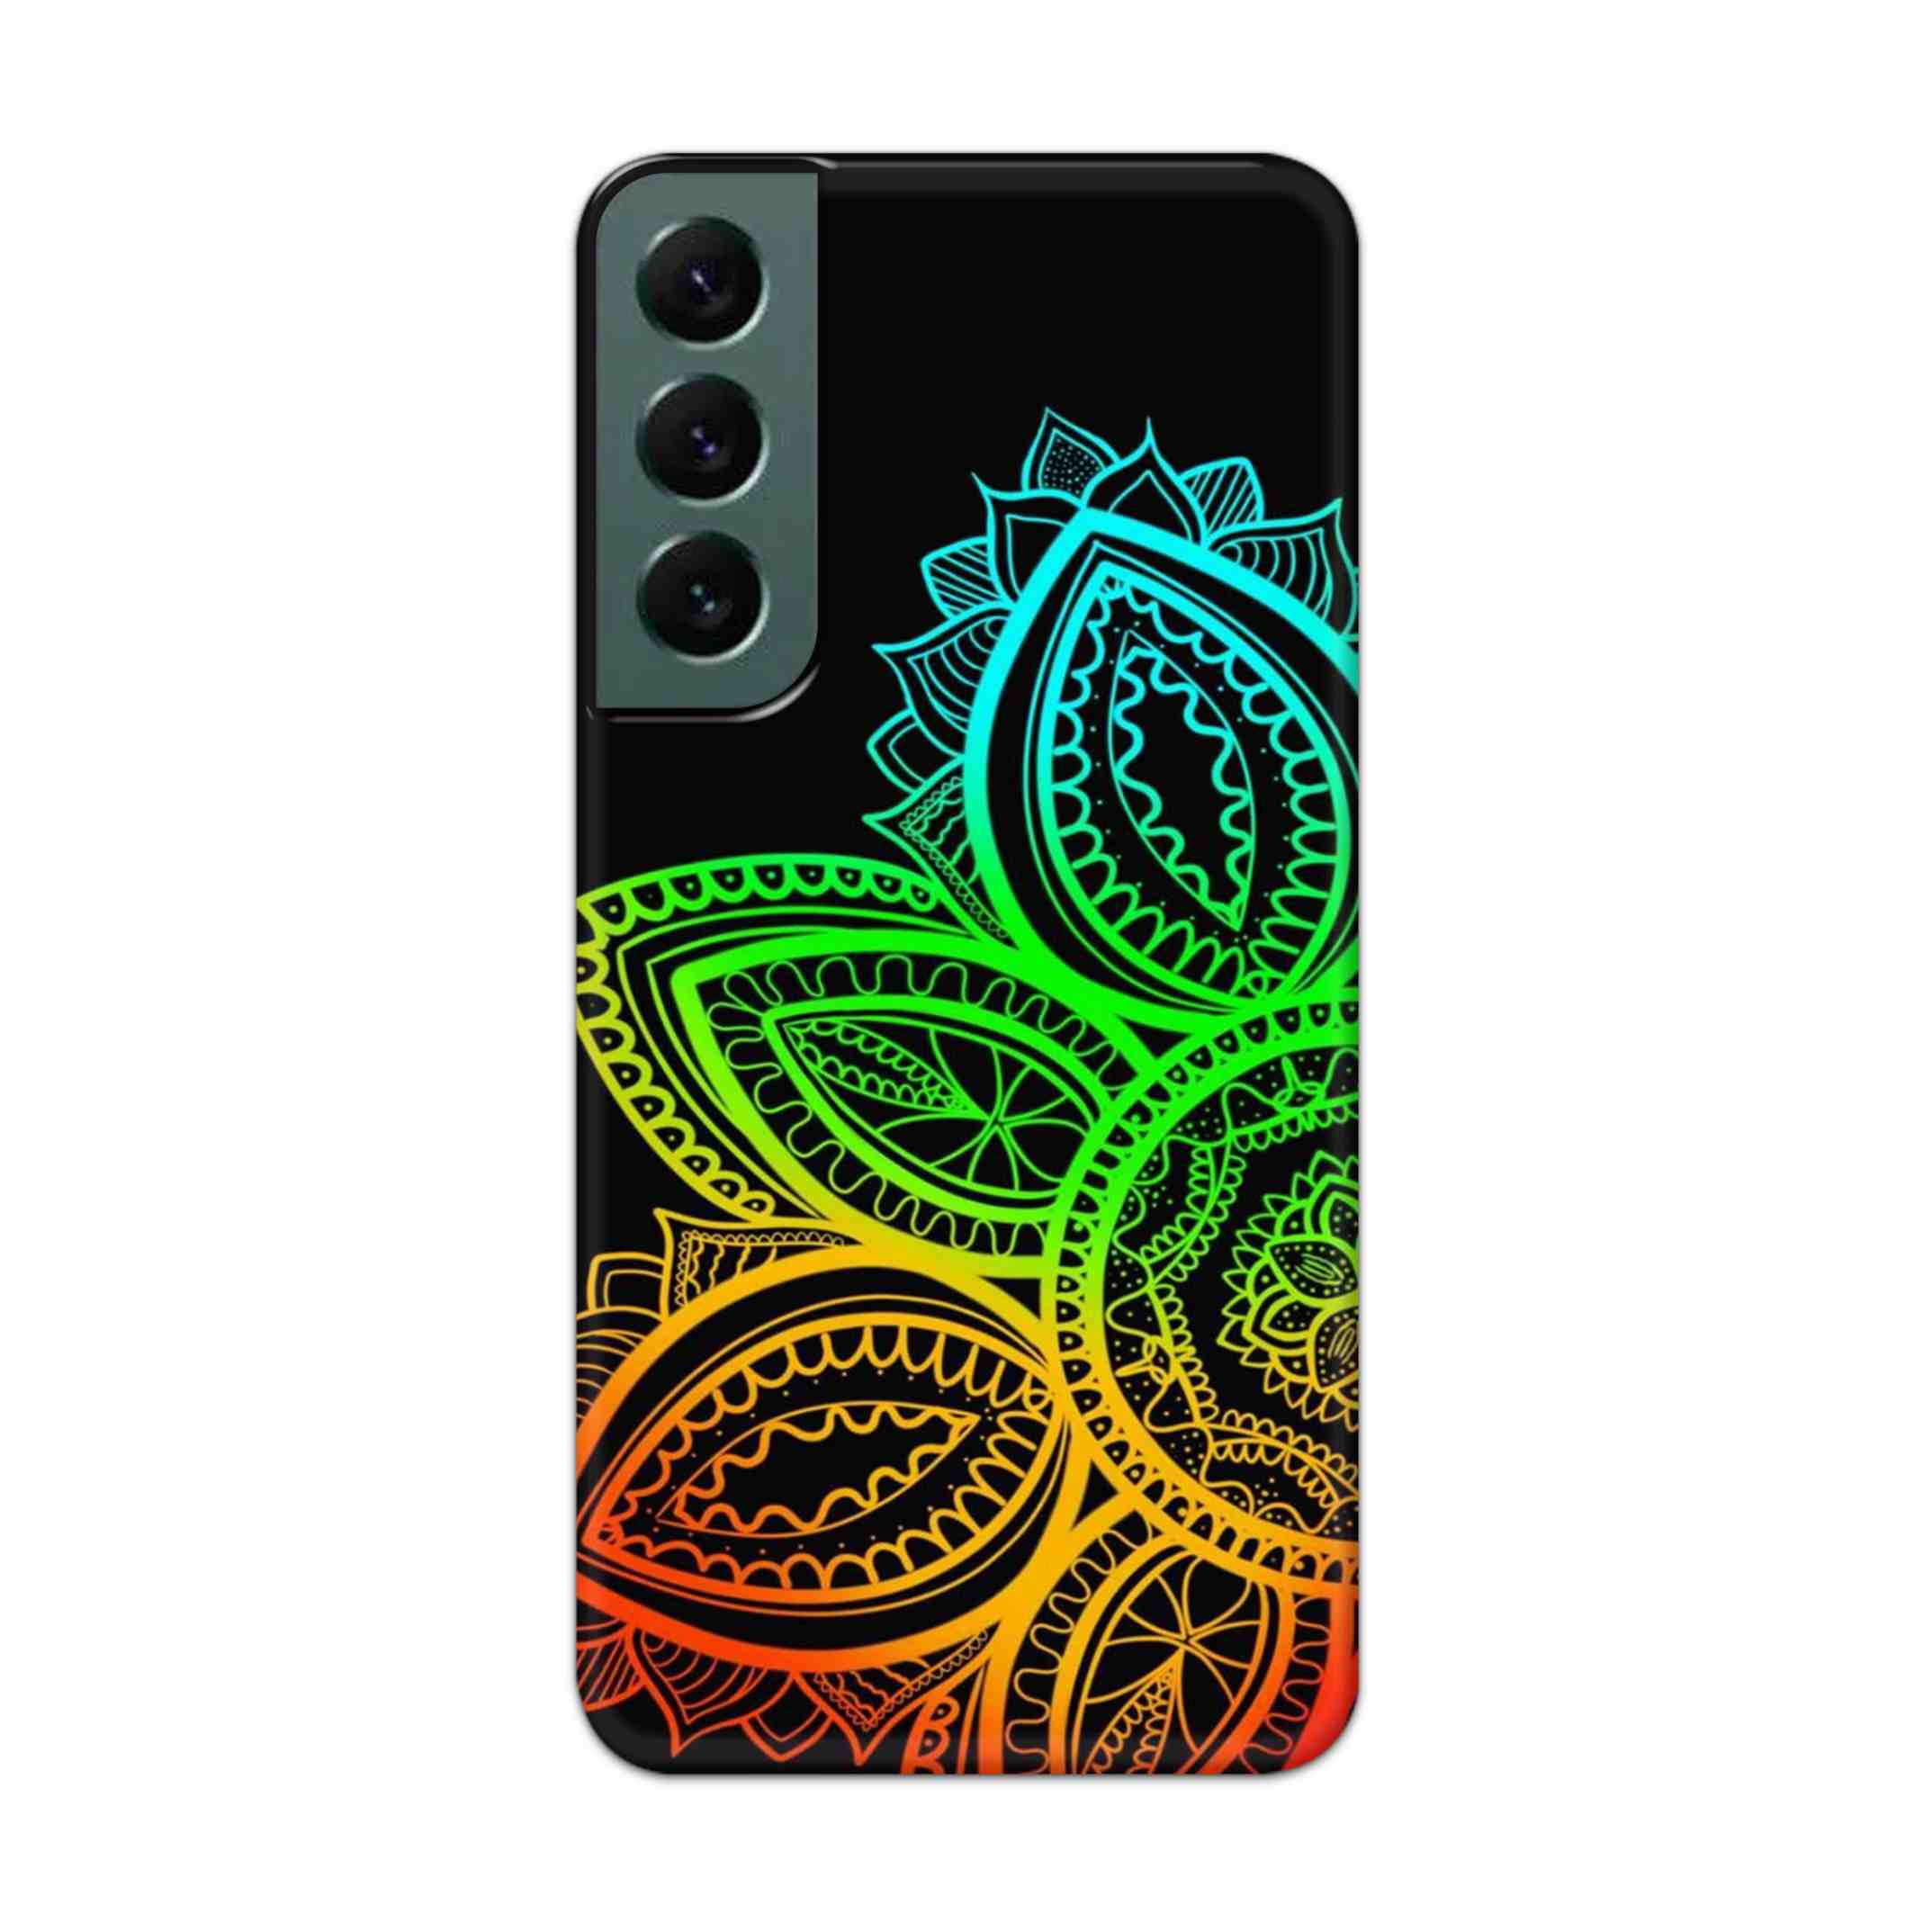 Buy Neon Mandala Hard Back Mobile Phone Case Cover For Samsung S22 Online